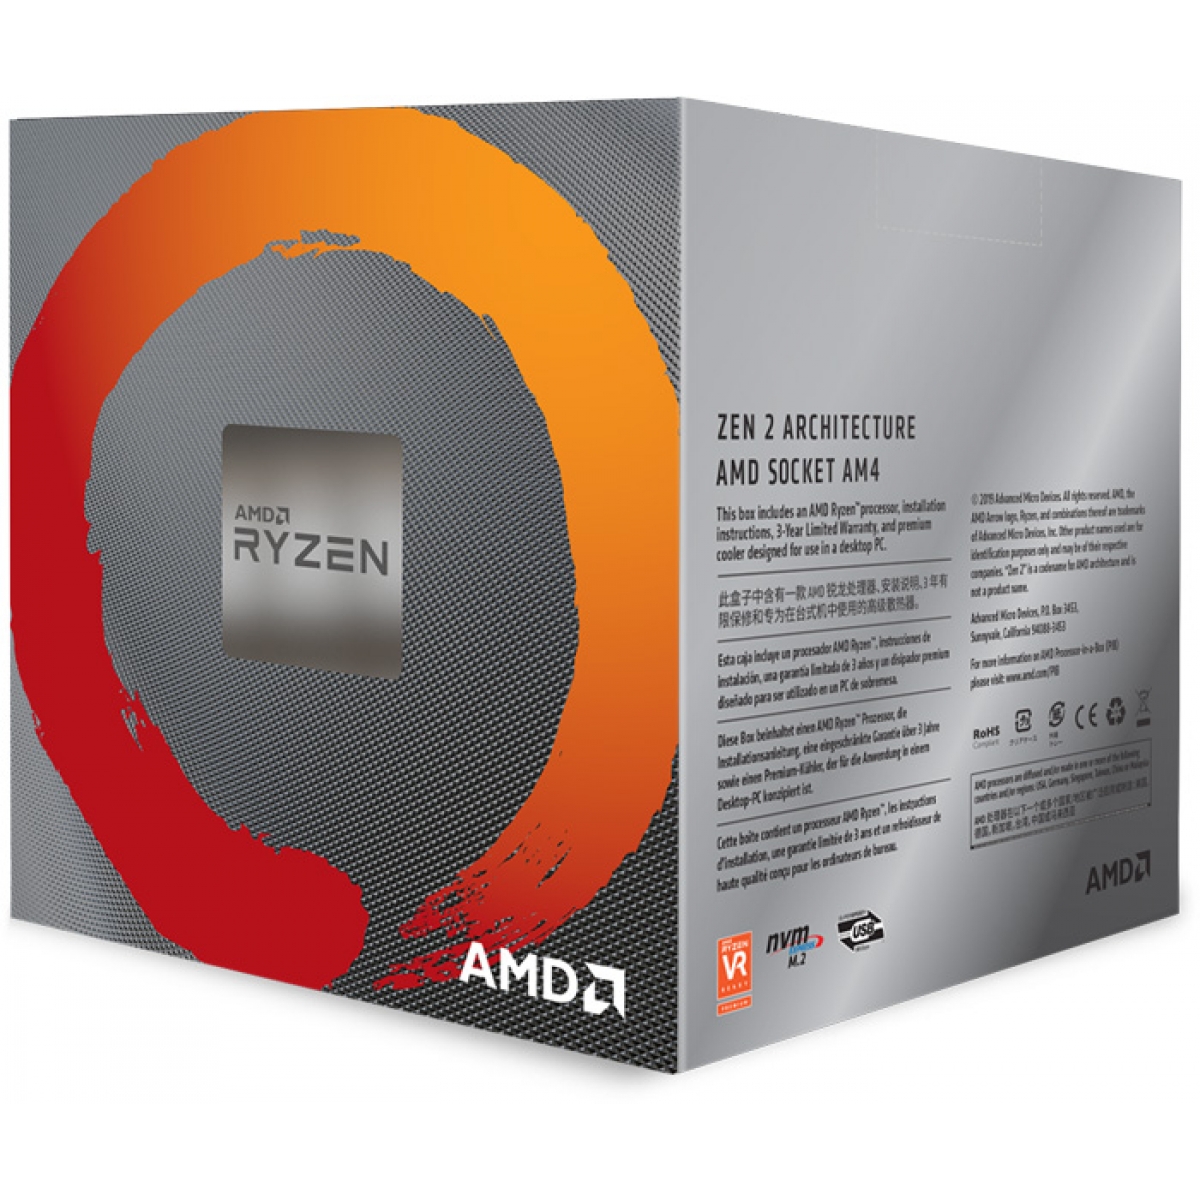 Processador AMD Ryzen 7 3700x 3.6GHz (4.4ghz Turbo), 8-core 16-thread, Cooler Wraith Prism RGB, AM4, S/ Video